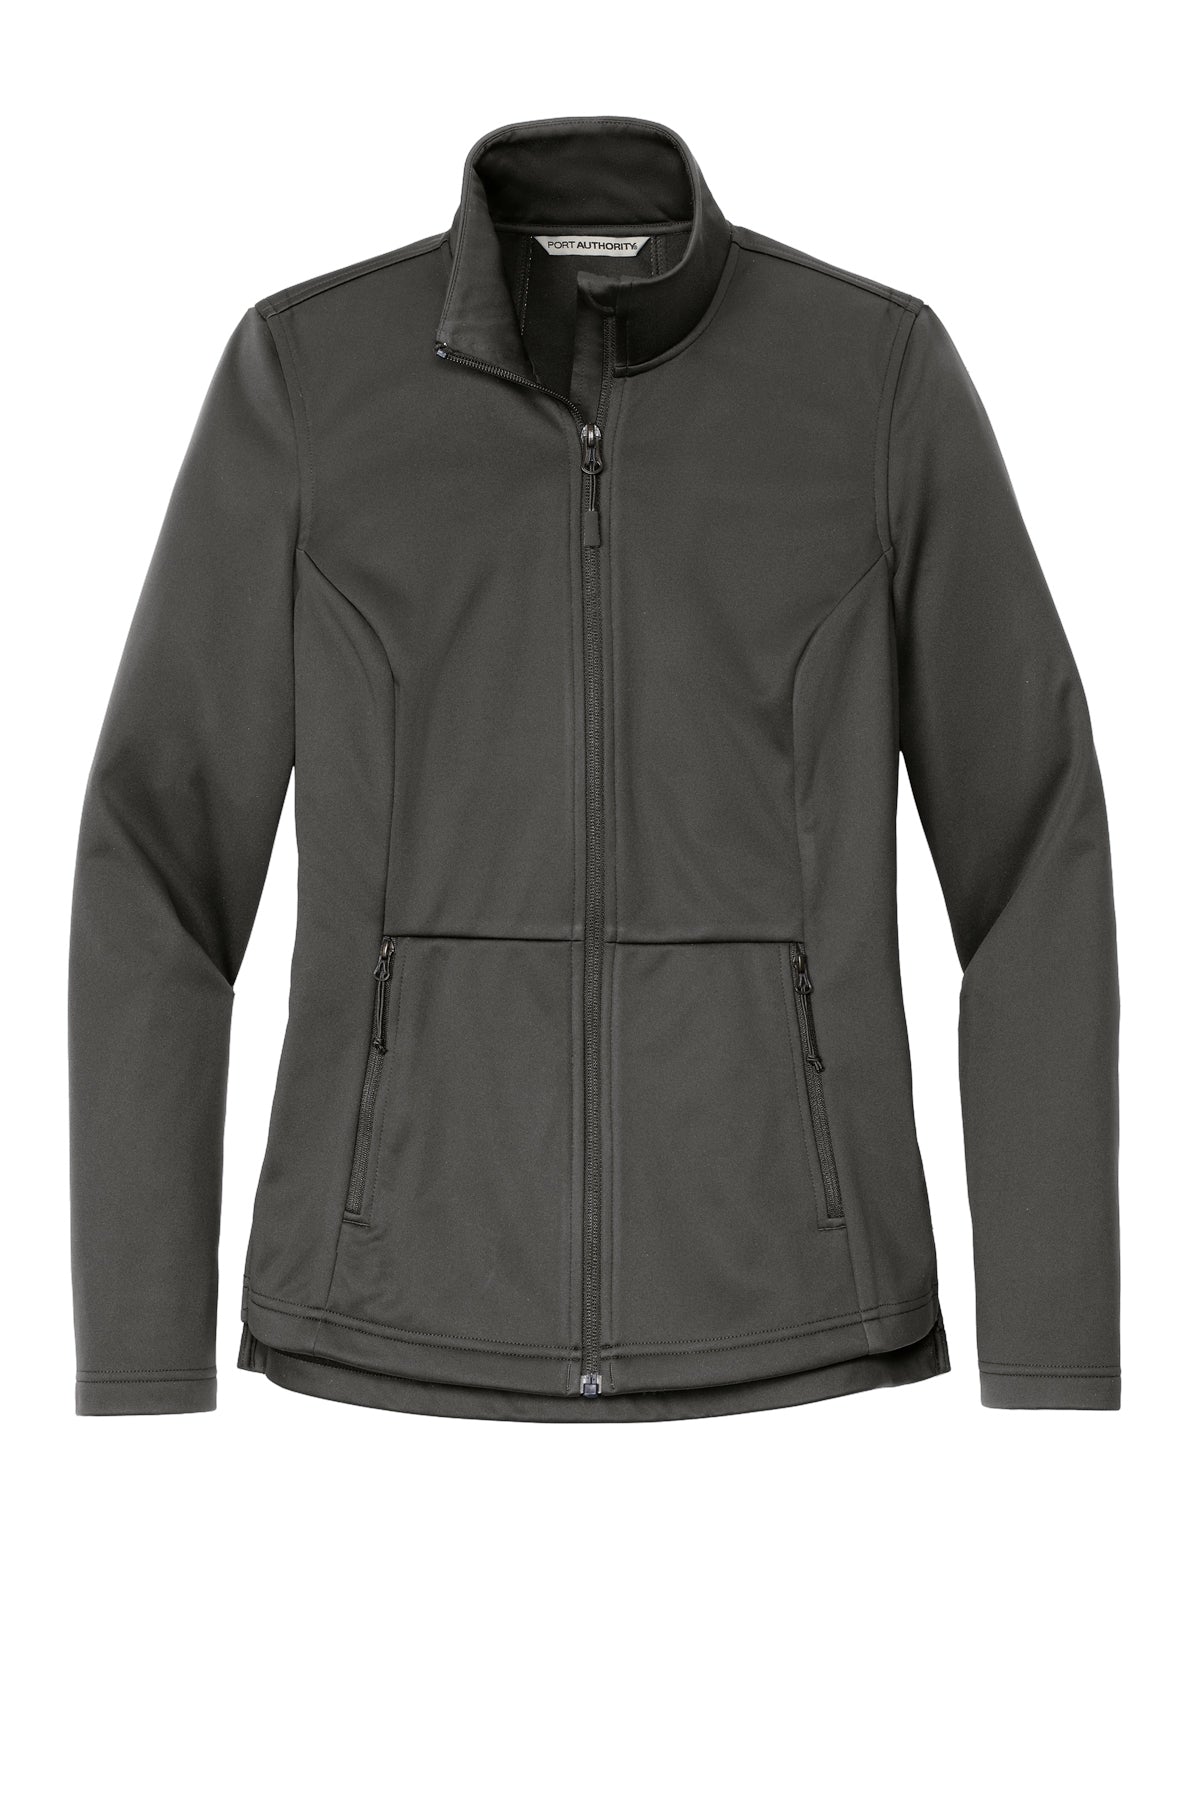 L617 Port Authority® Ladies Flexshell Jacket